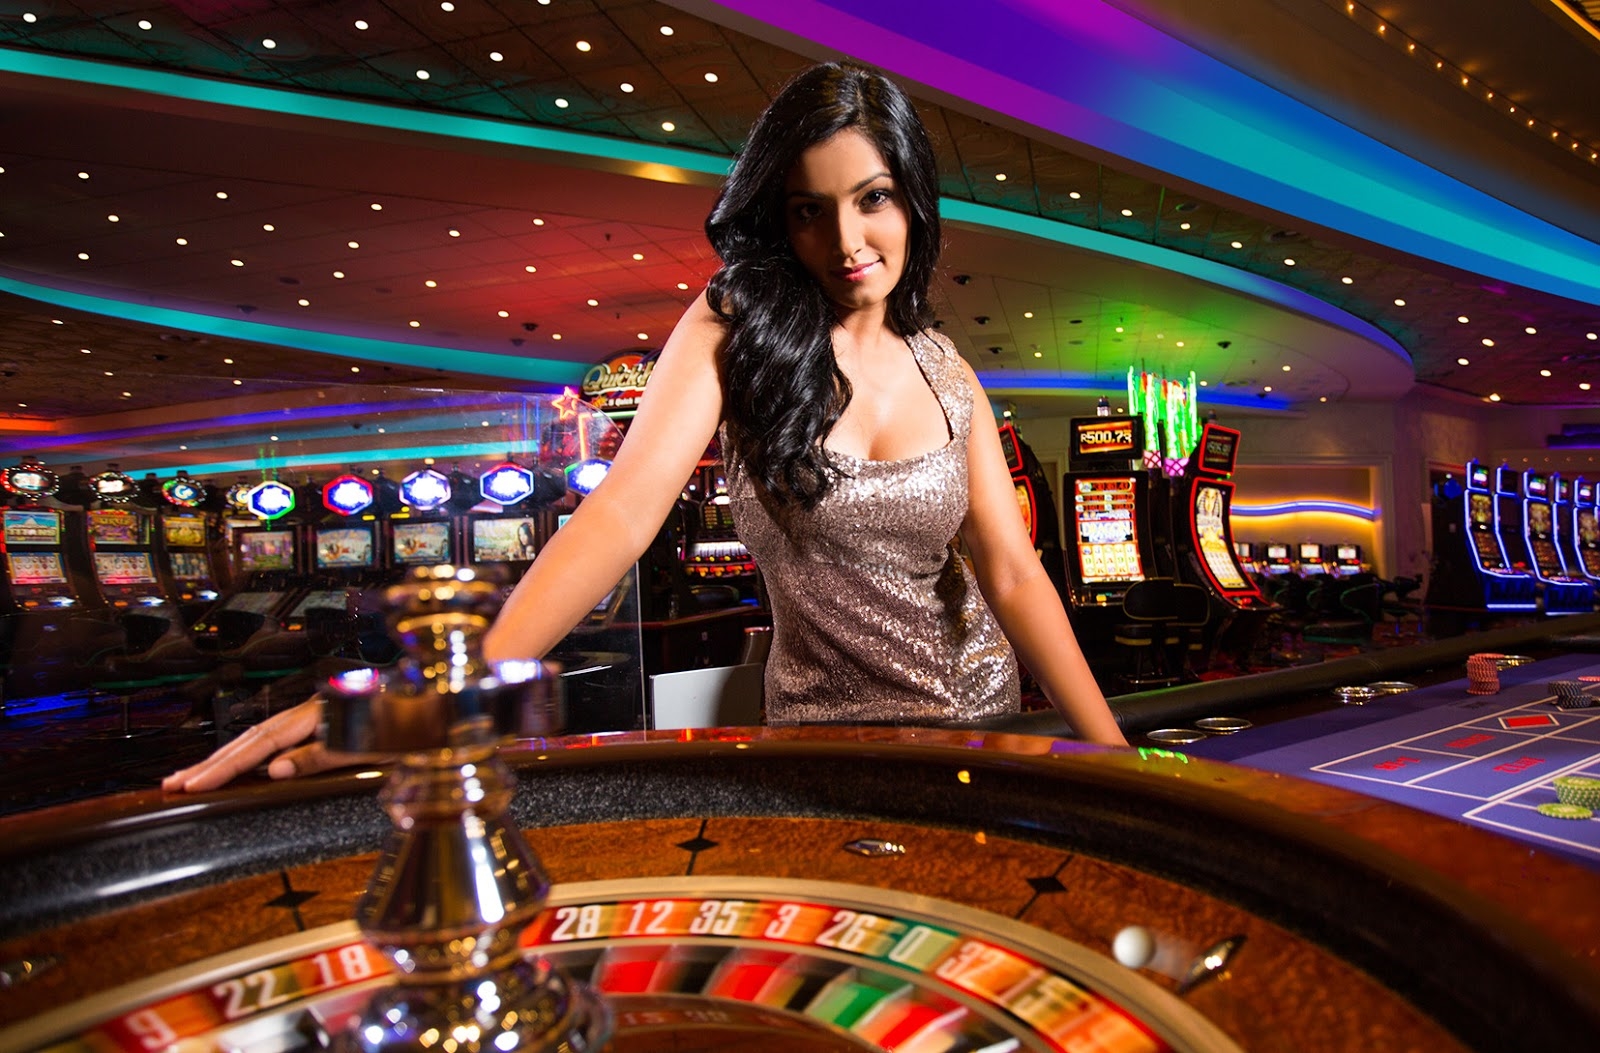 Http casino com ru ограбления казино в гта 5 онлайн